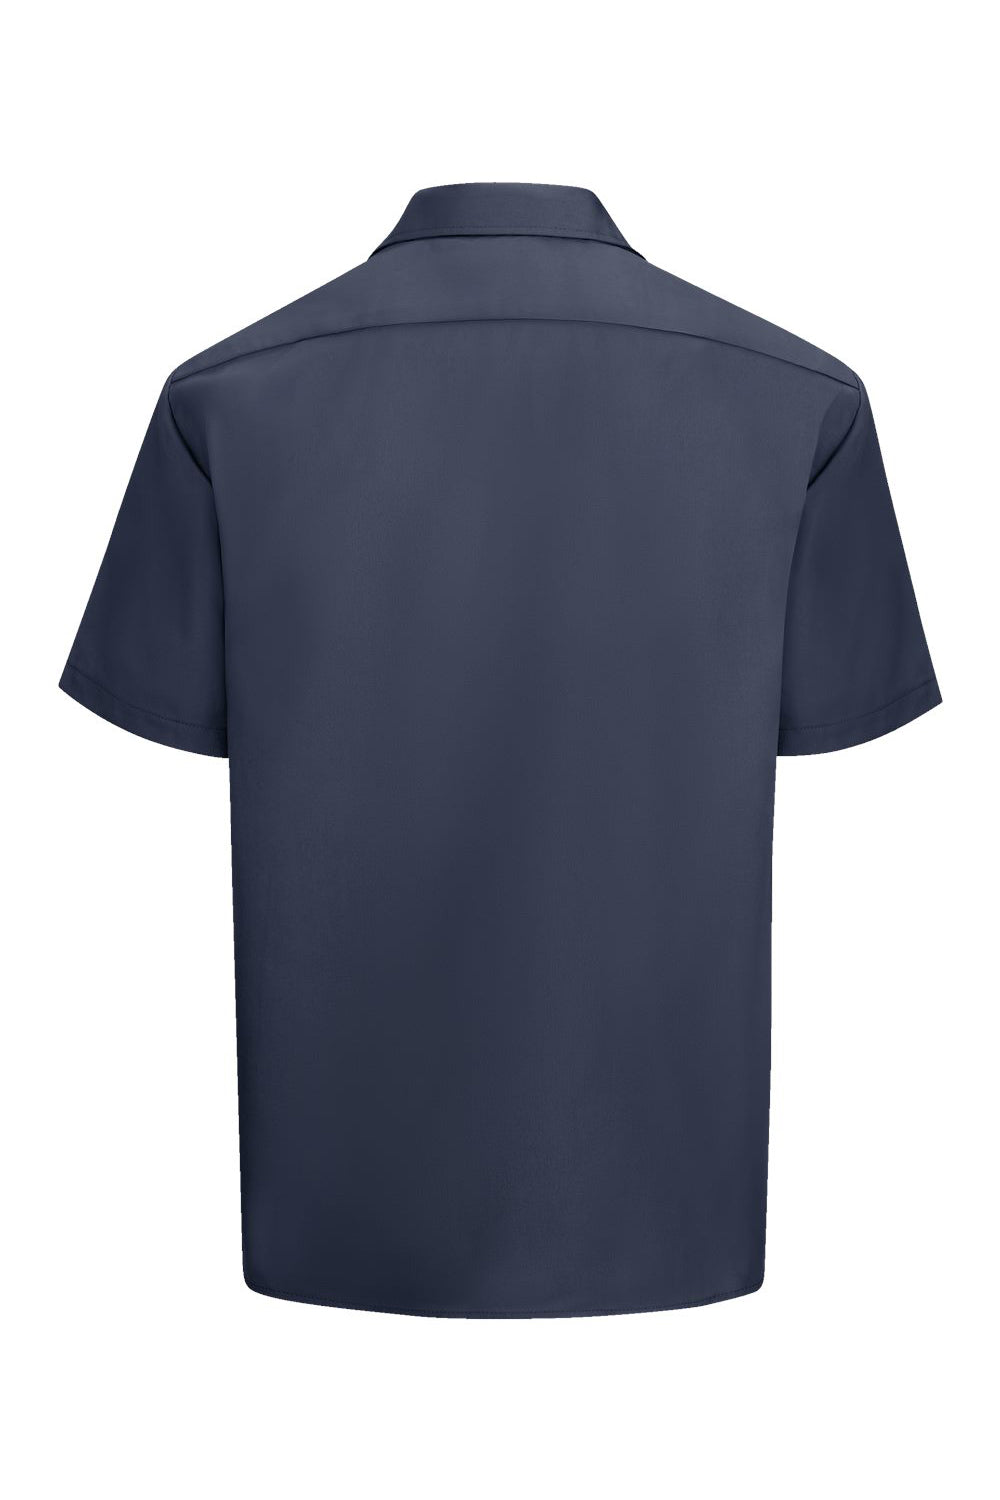 Dickies 2574 Mens Moisture Wicking Short Sleeve Button Down Work Shirt w/ Double Pockets Dark Navy Blue Flat Back